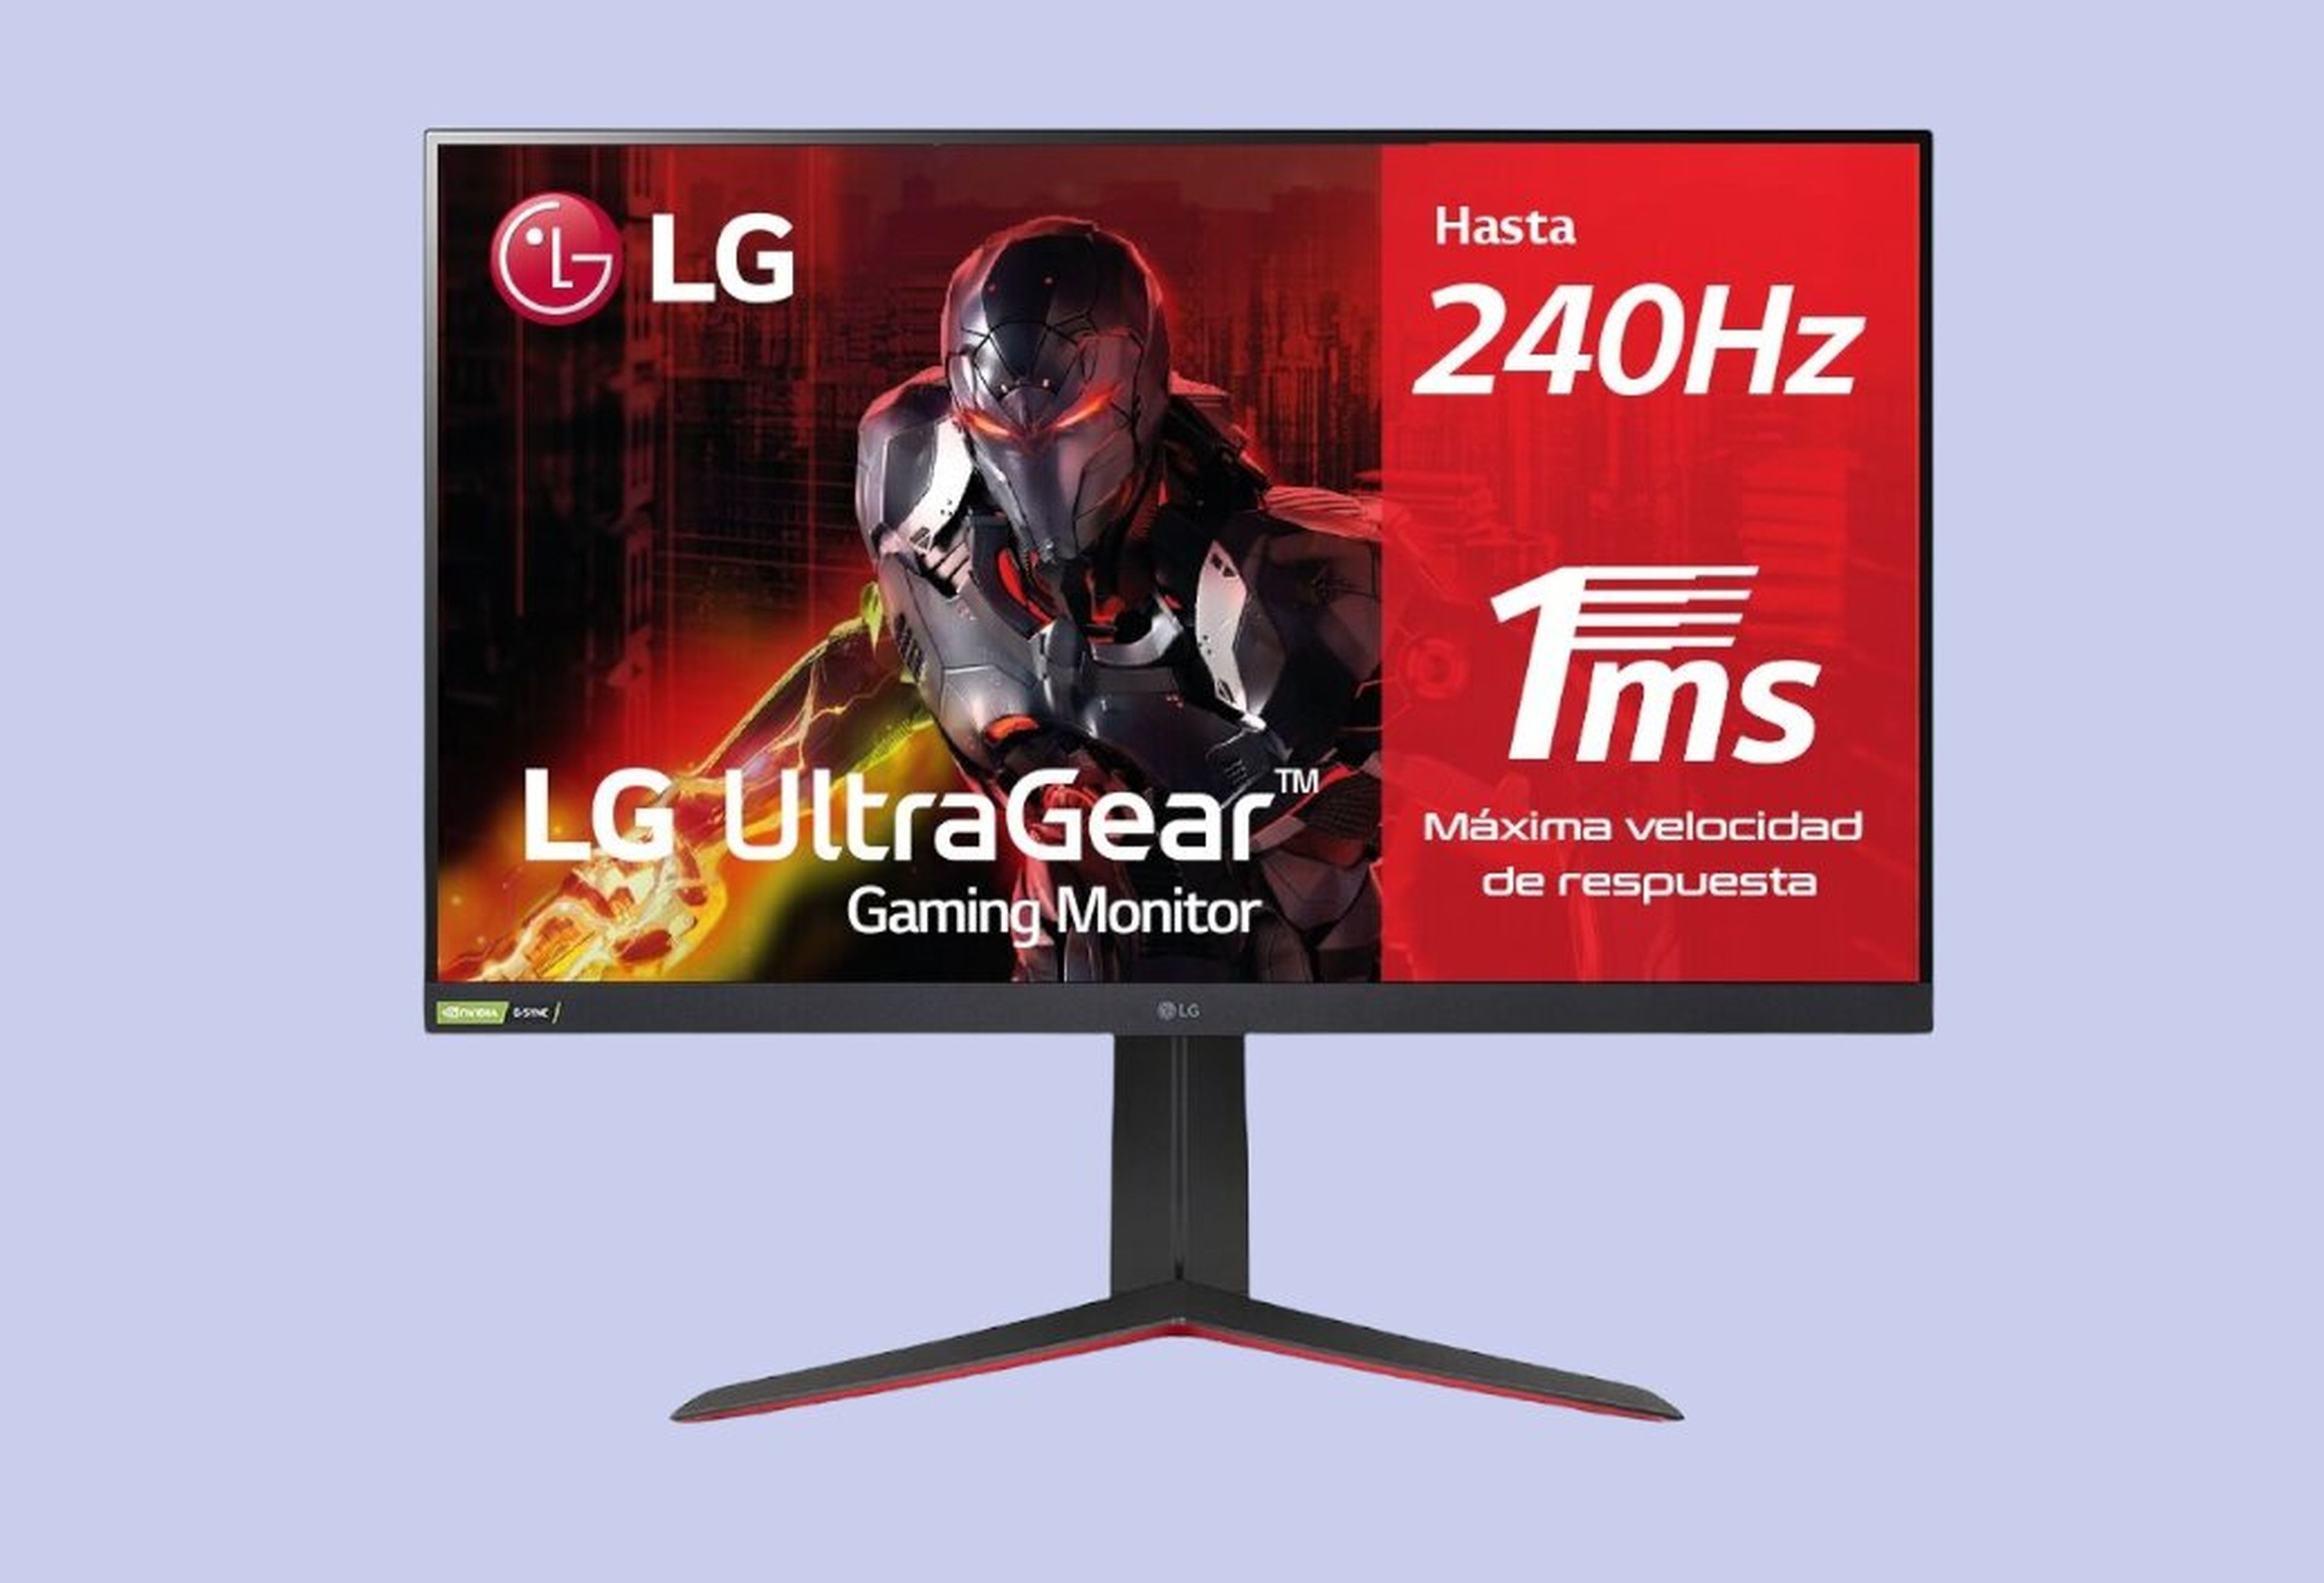 LG UltraGear gaming